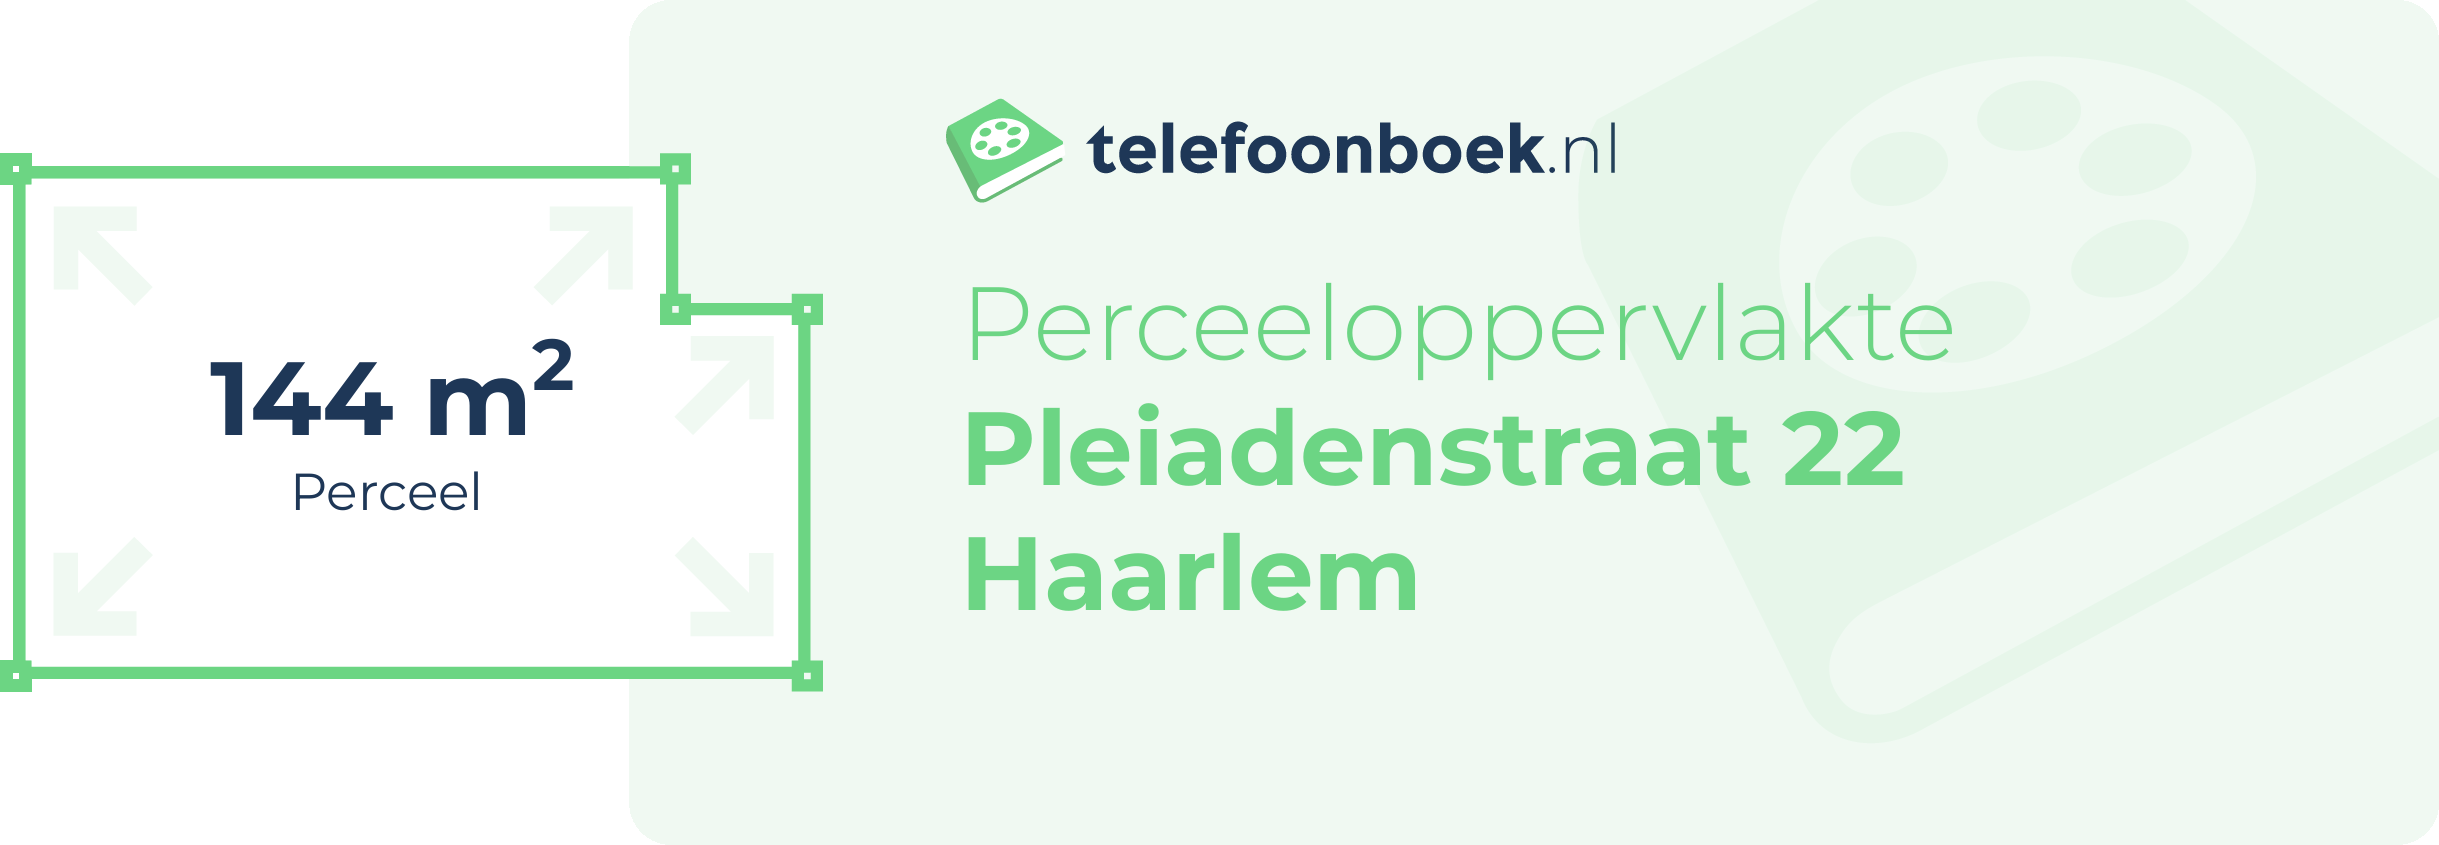 Perceeloppervlakte Pleiadenstraat 22 Haarlem